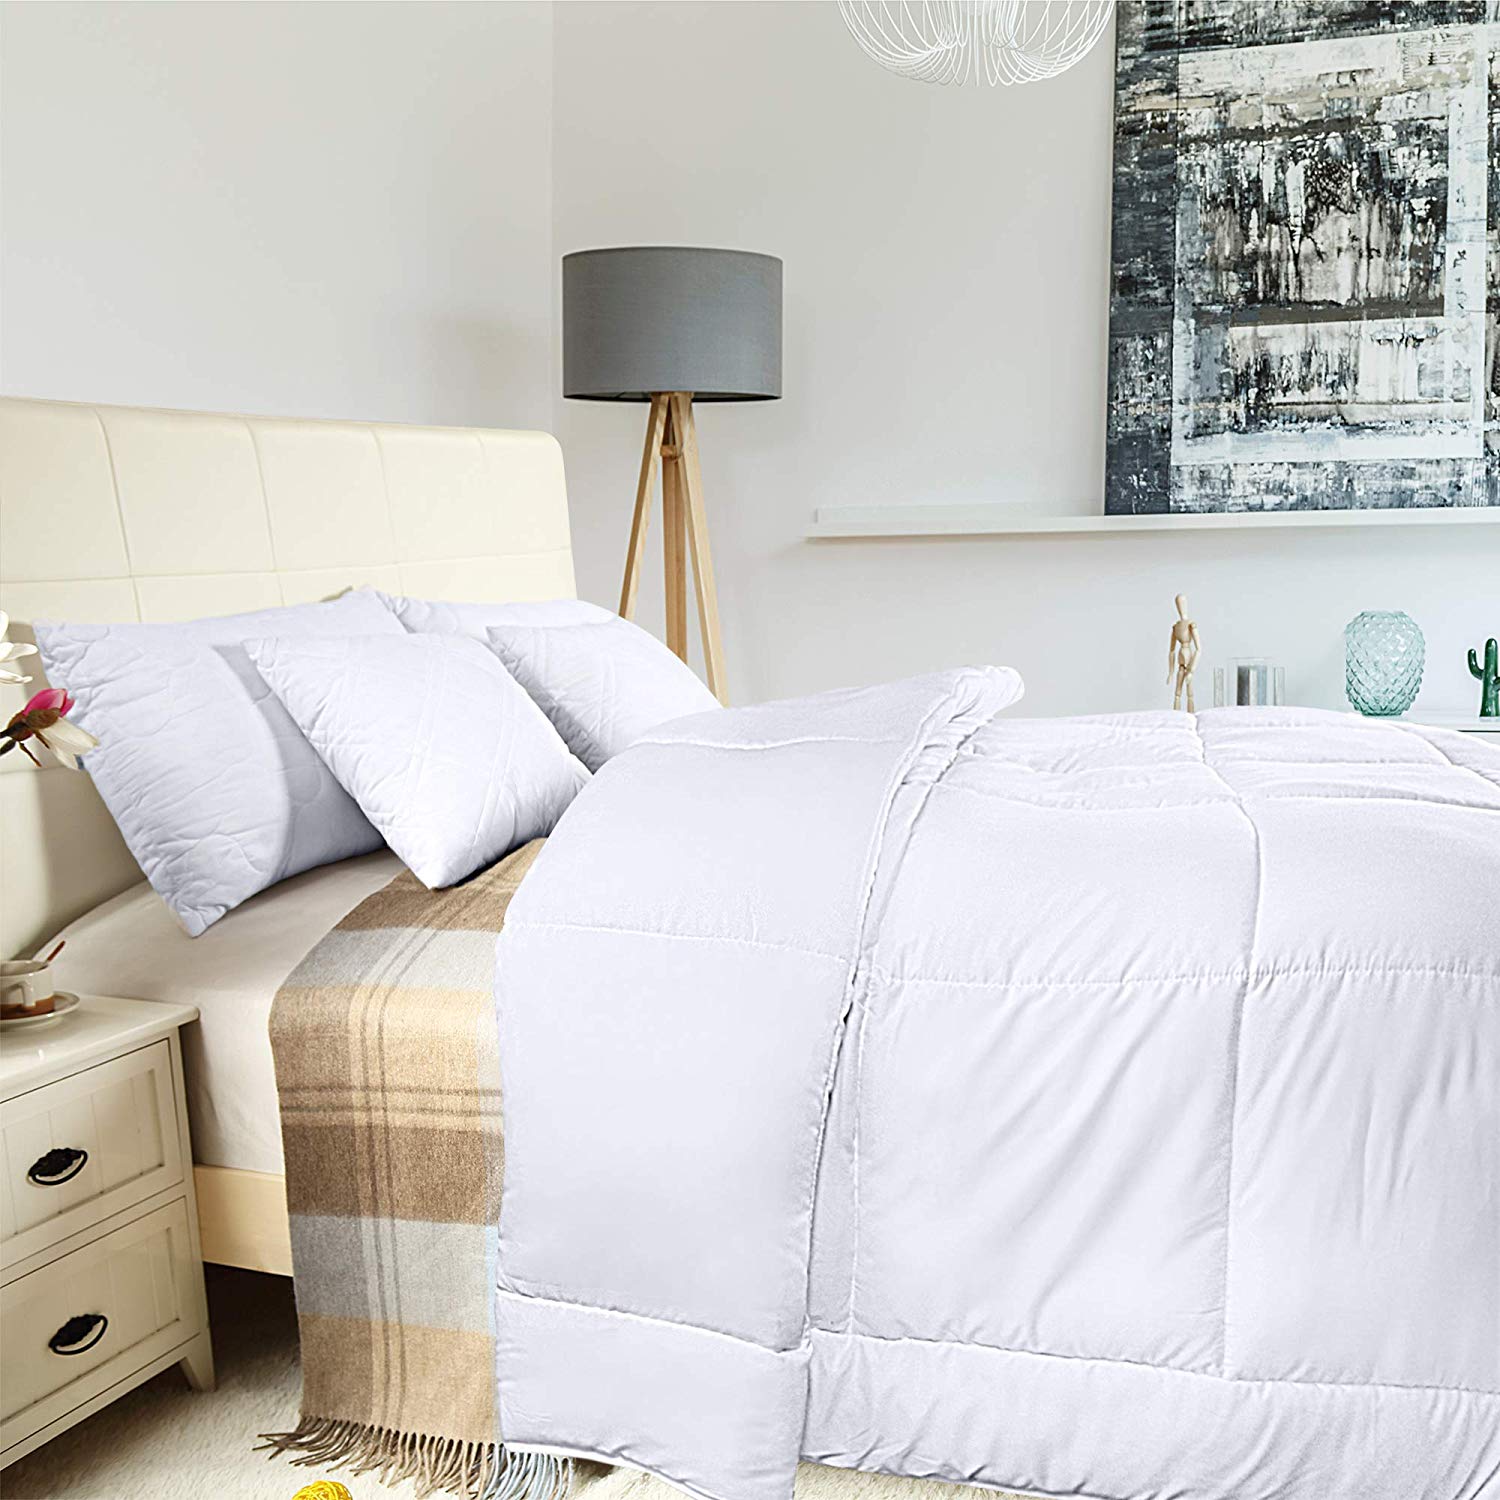 Utopia Bedding Down Alternative Comforter (Queen, White) - All Season  Comforter - Plush Siliconized Fiberfill Duvet Insert - Box